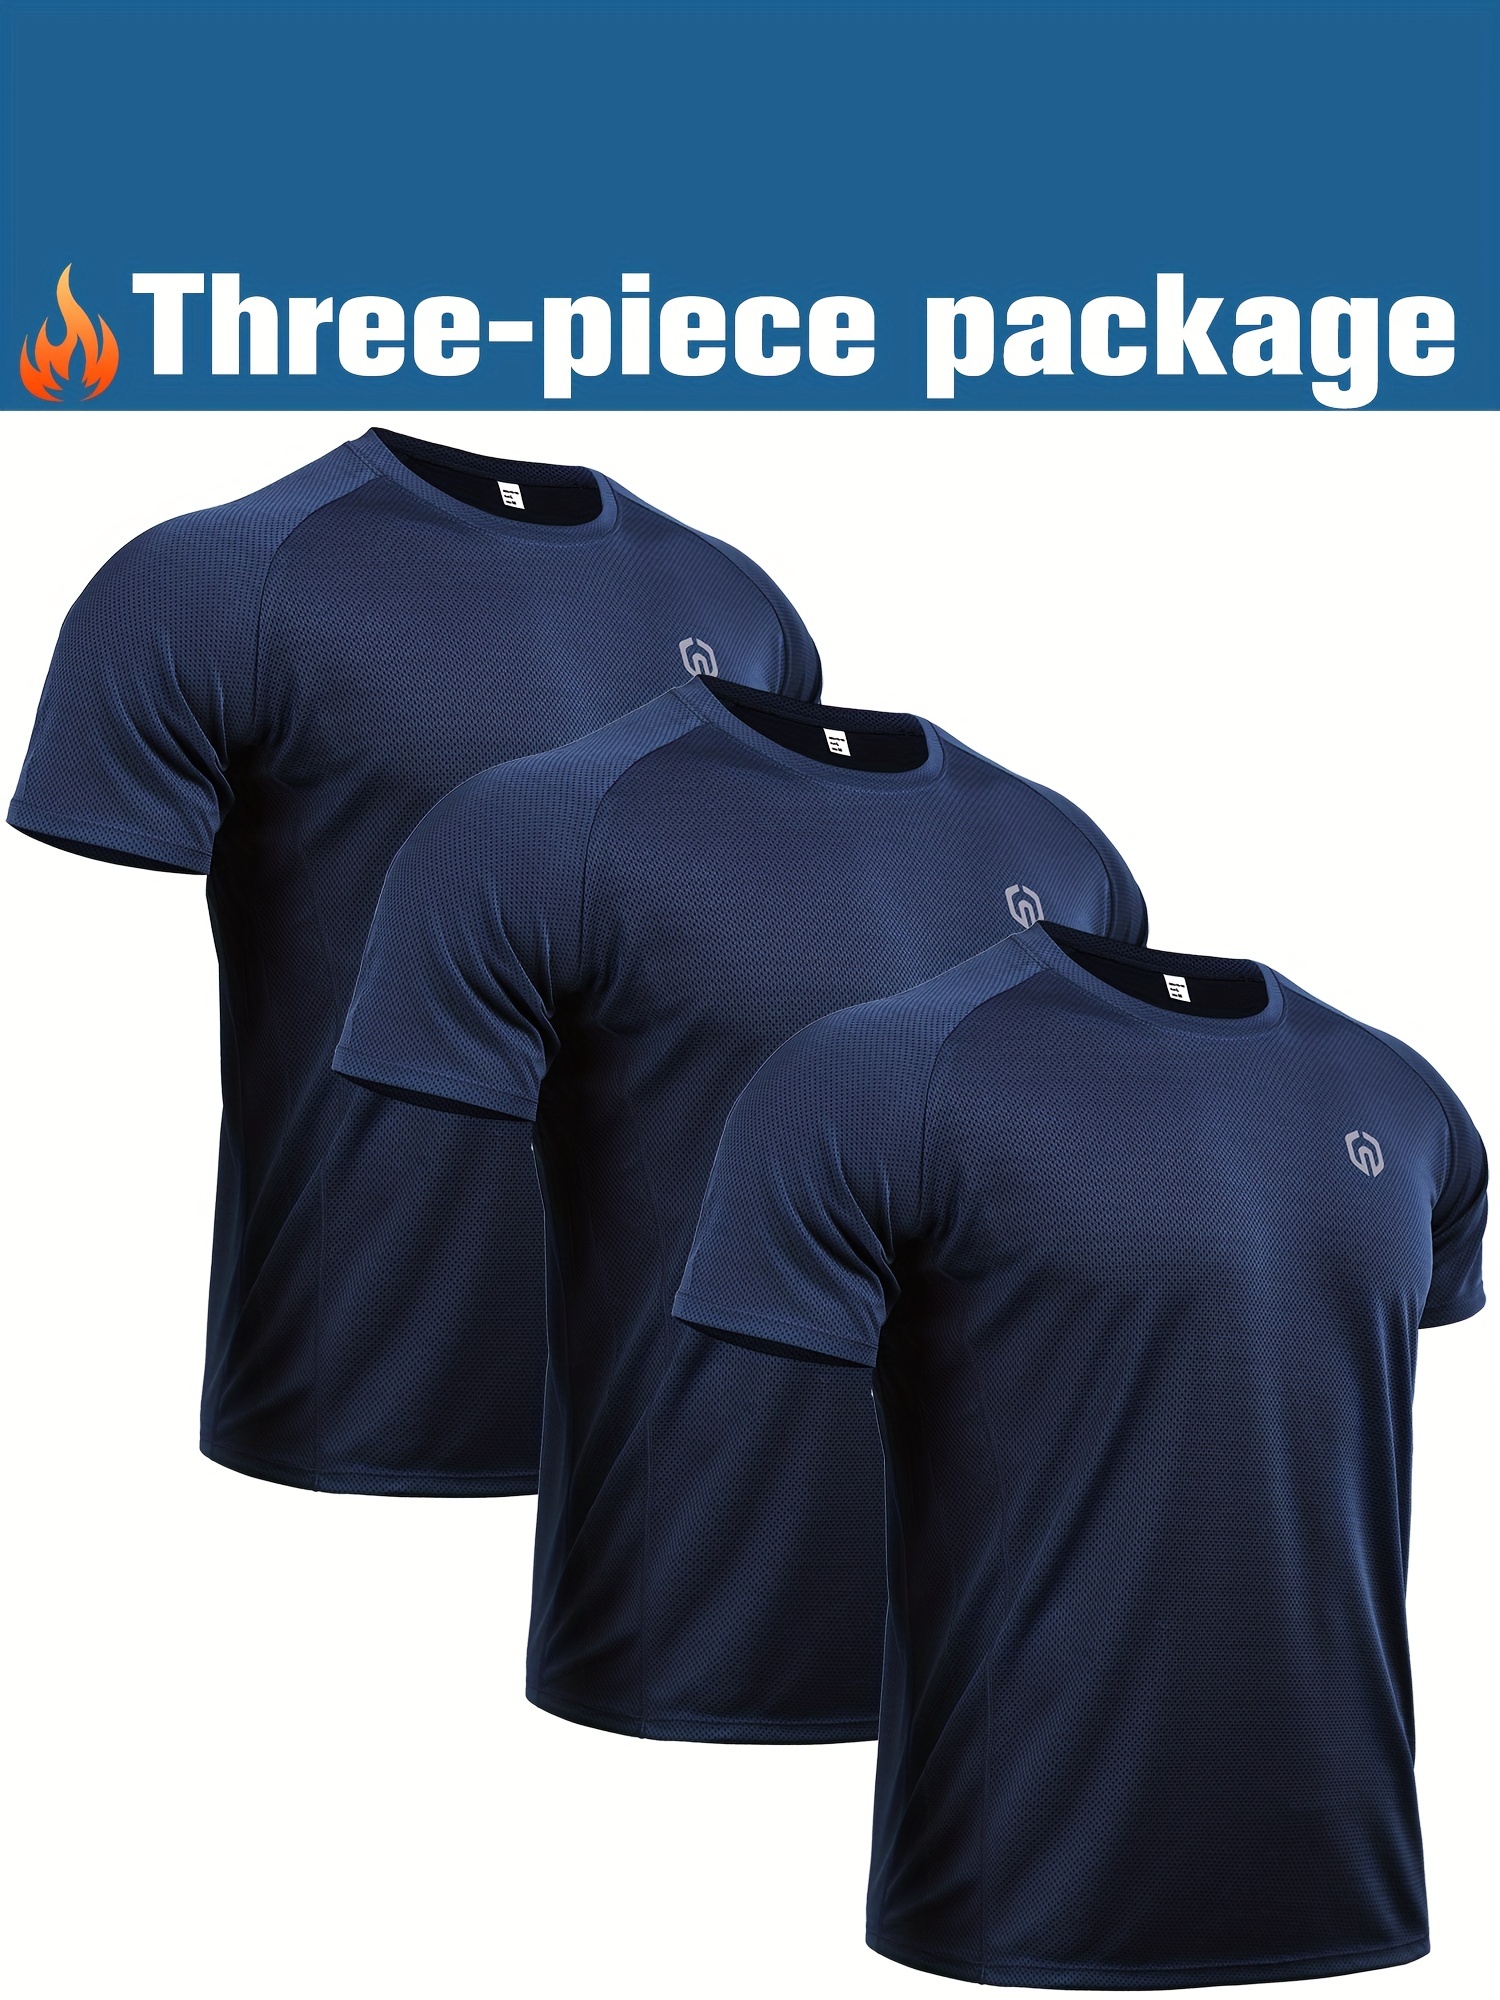 Hommes Fitness Sports O-cou Stretch Top à séchage rapide T-shirt